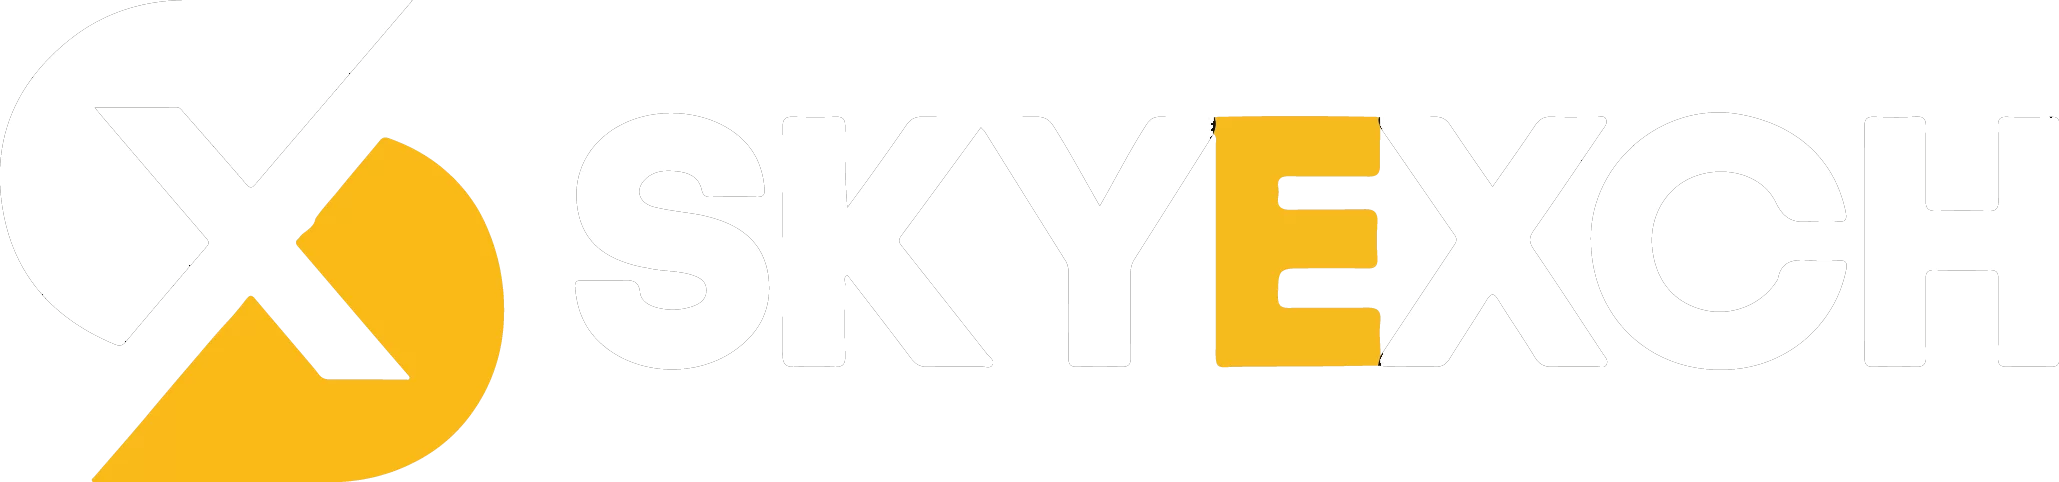 Sky Exchange Logo